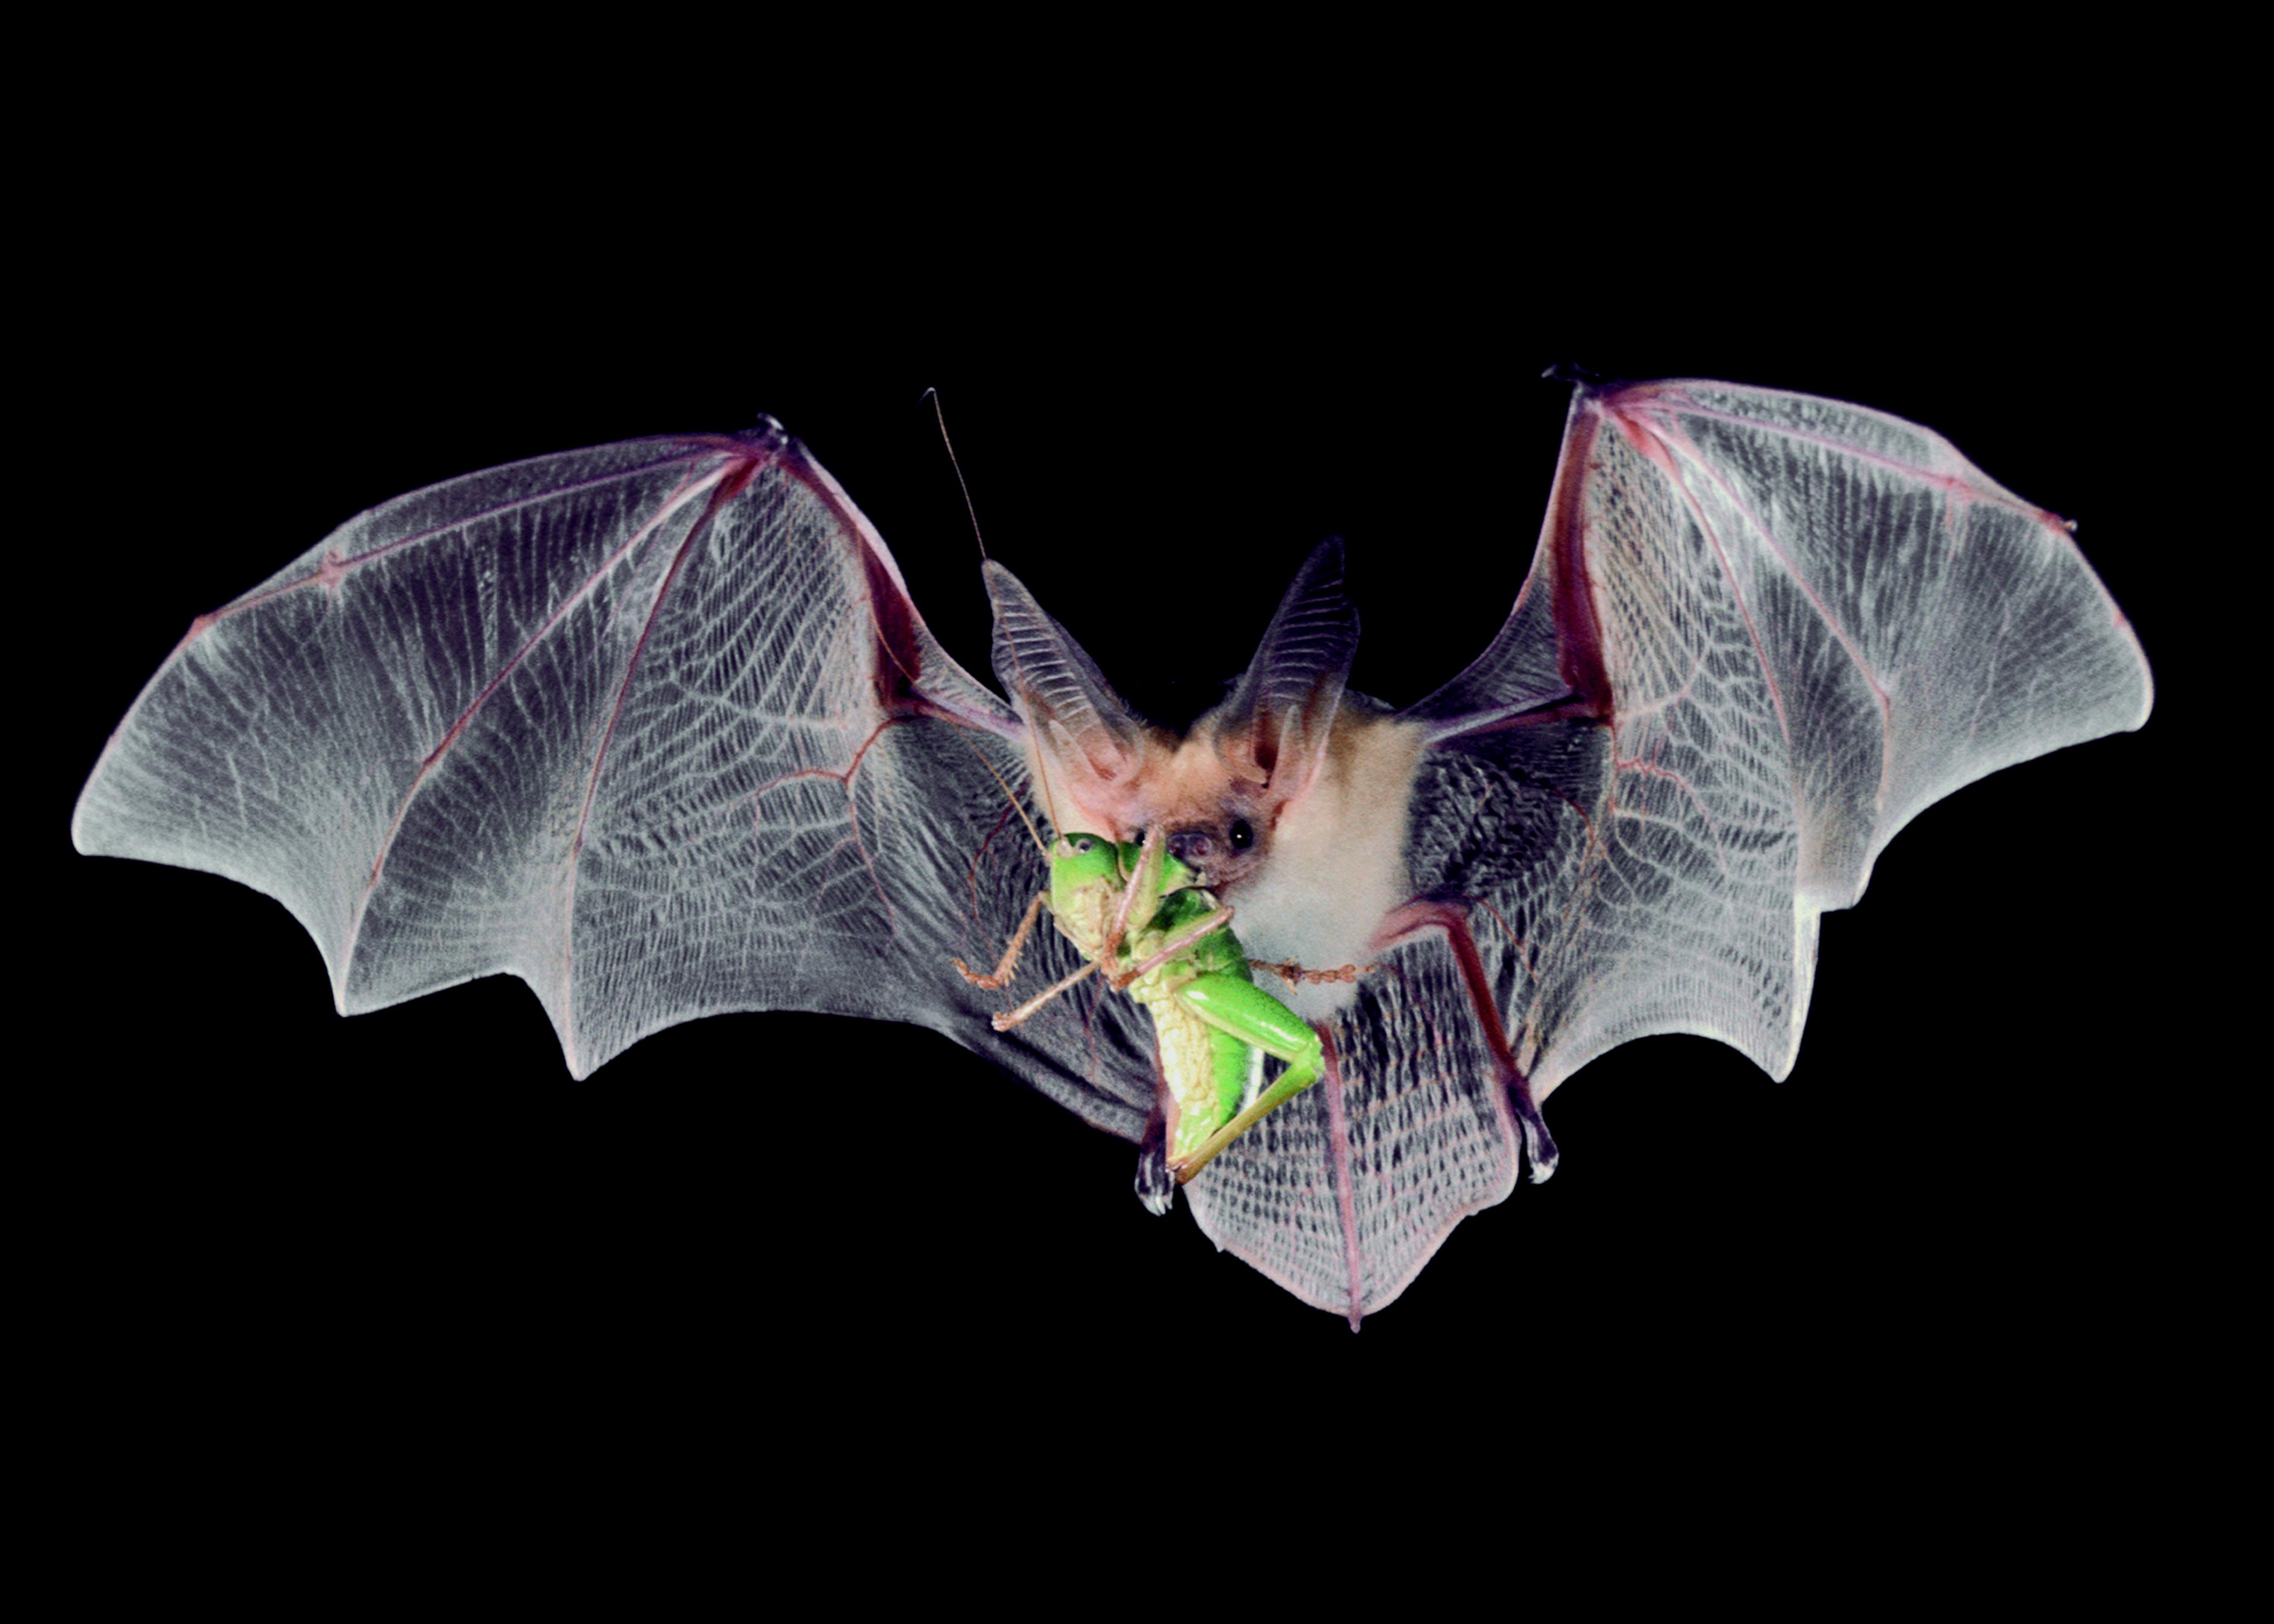 Migrating bats may be resting, not sick, says UC bat expert - Green Blog -  ANR Blogs